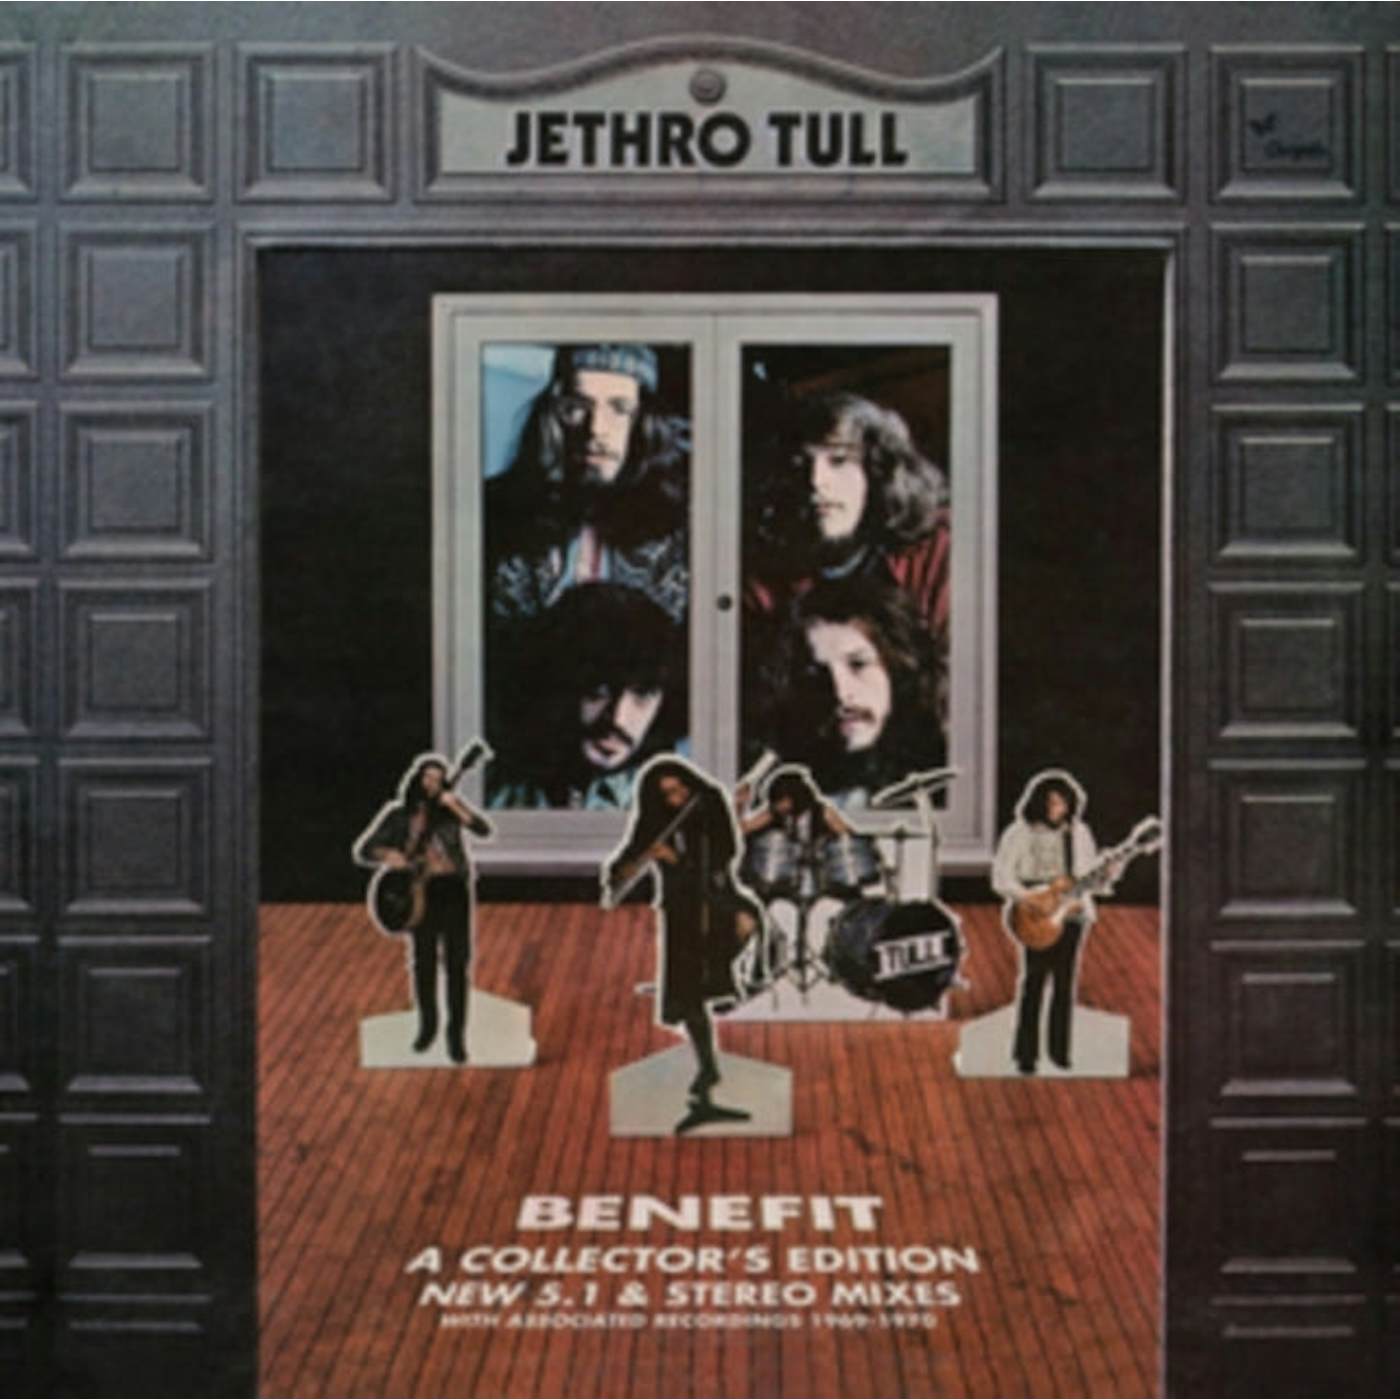 Jethro Tull LP Vinyl Record - Benefit